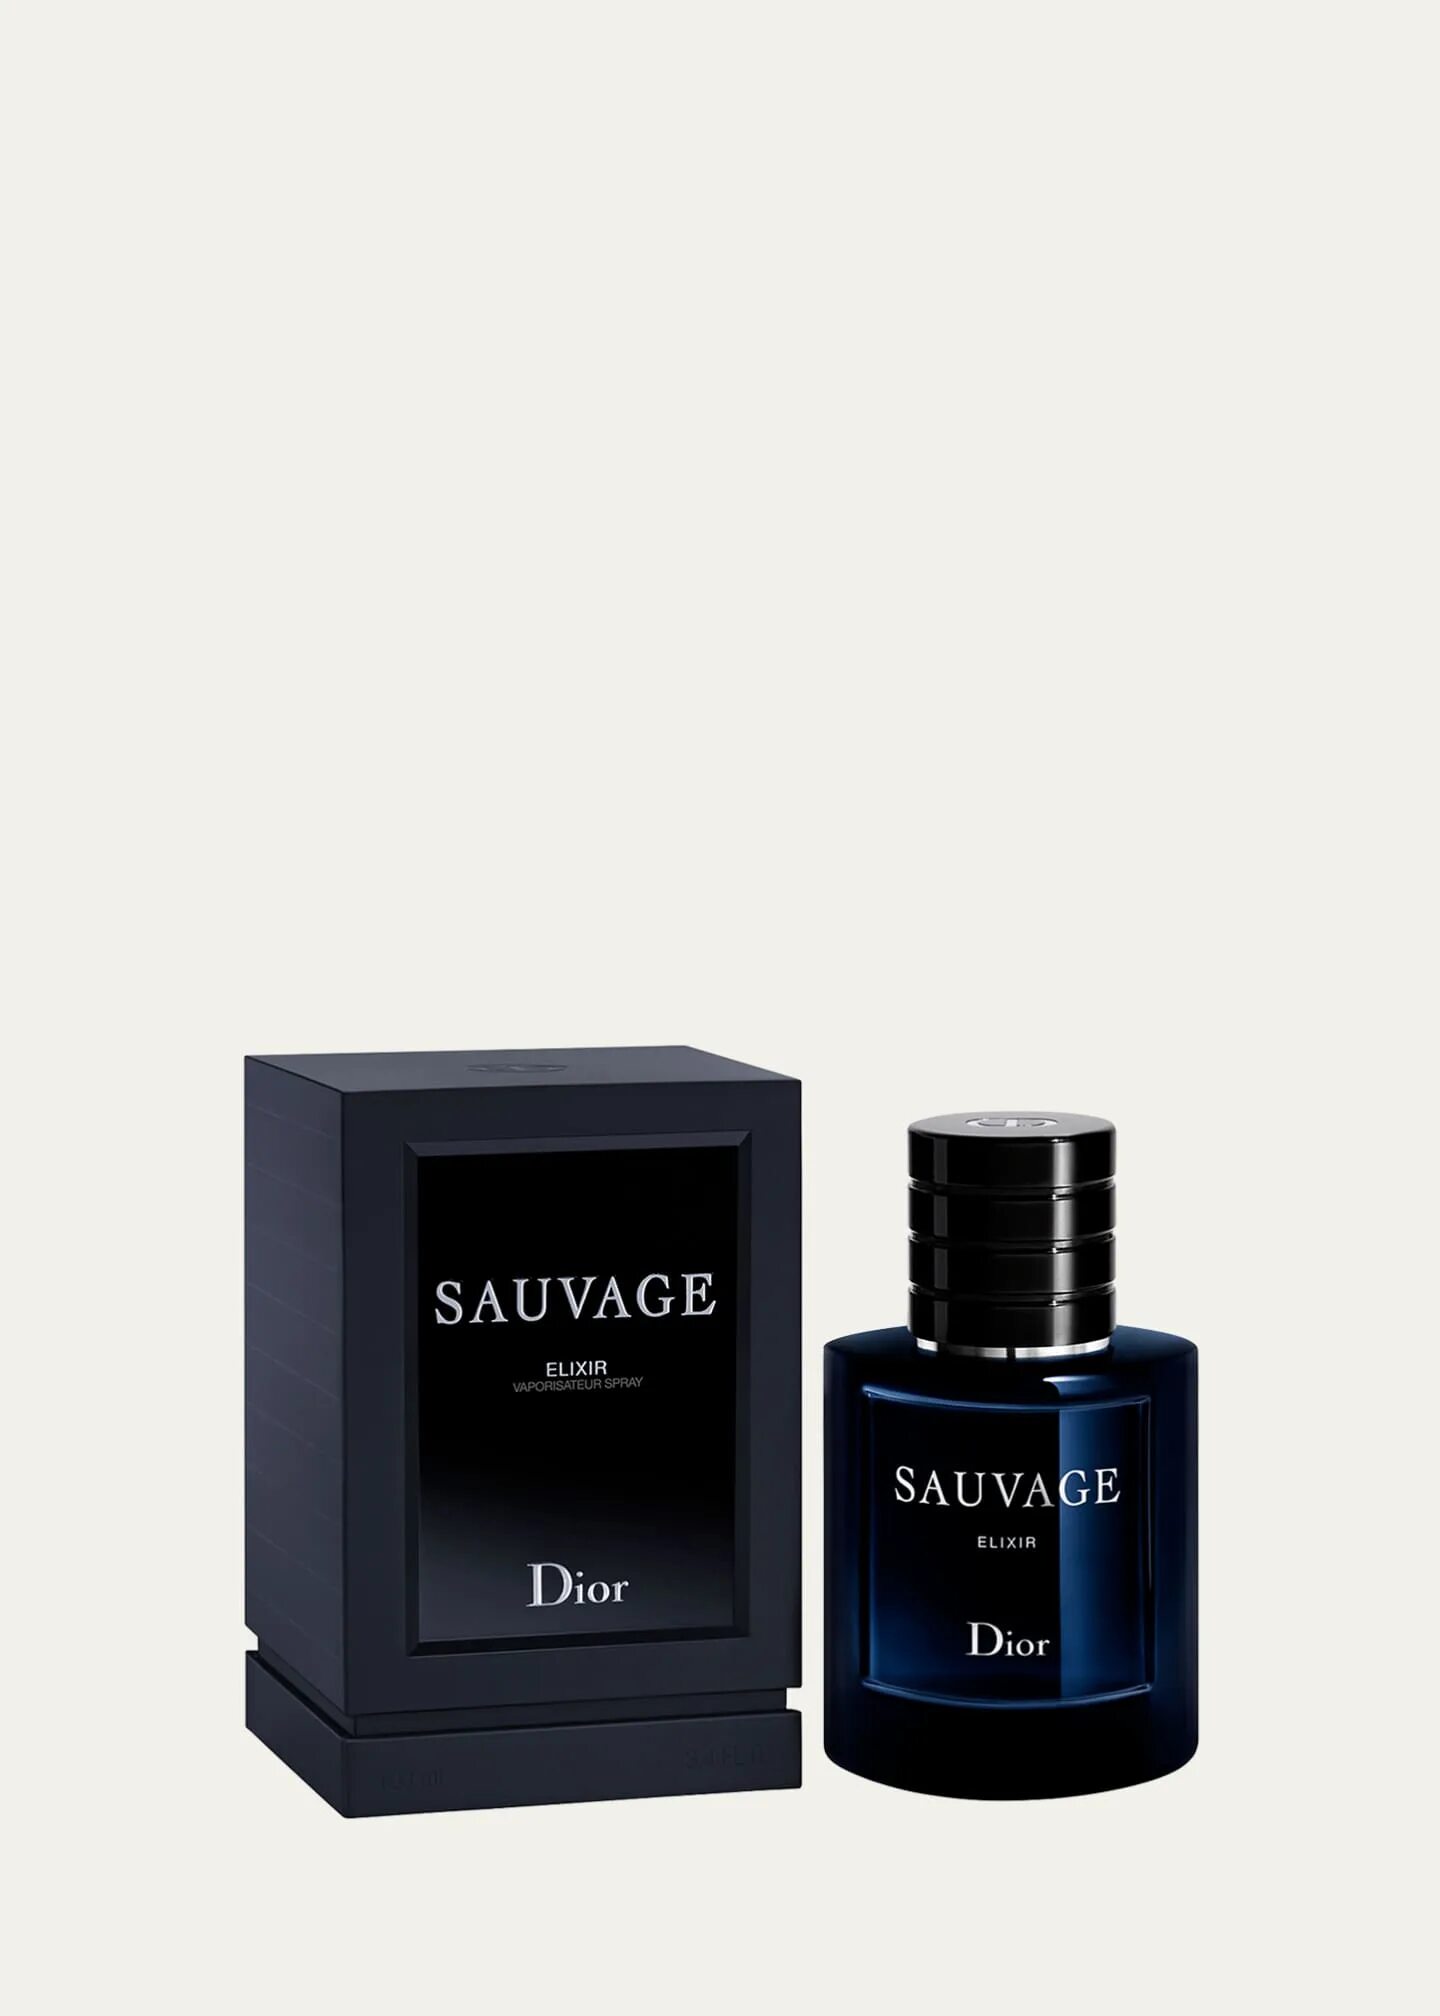 Диор эликсир мужской. Dior sauvage Elixir 100ml. Dior sauvage Elixir Parfum. Dior sauvage Elixir 60ml. Elixir Dior sauvage аромат.